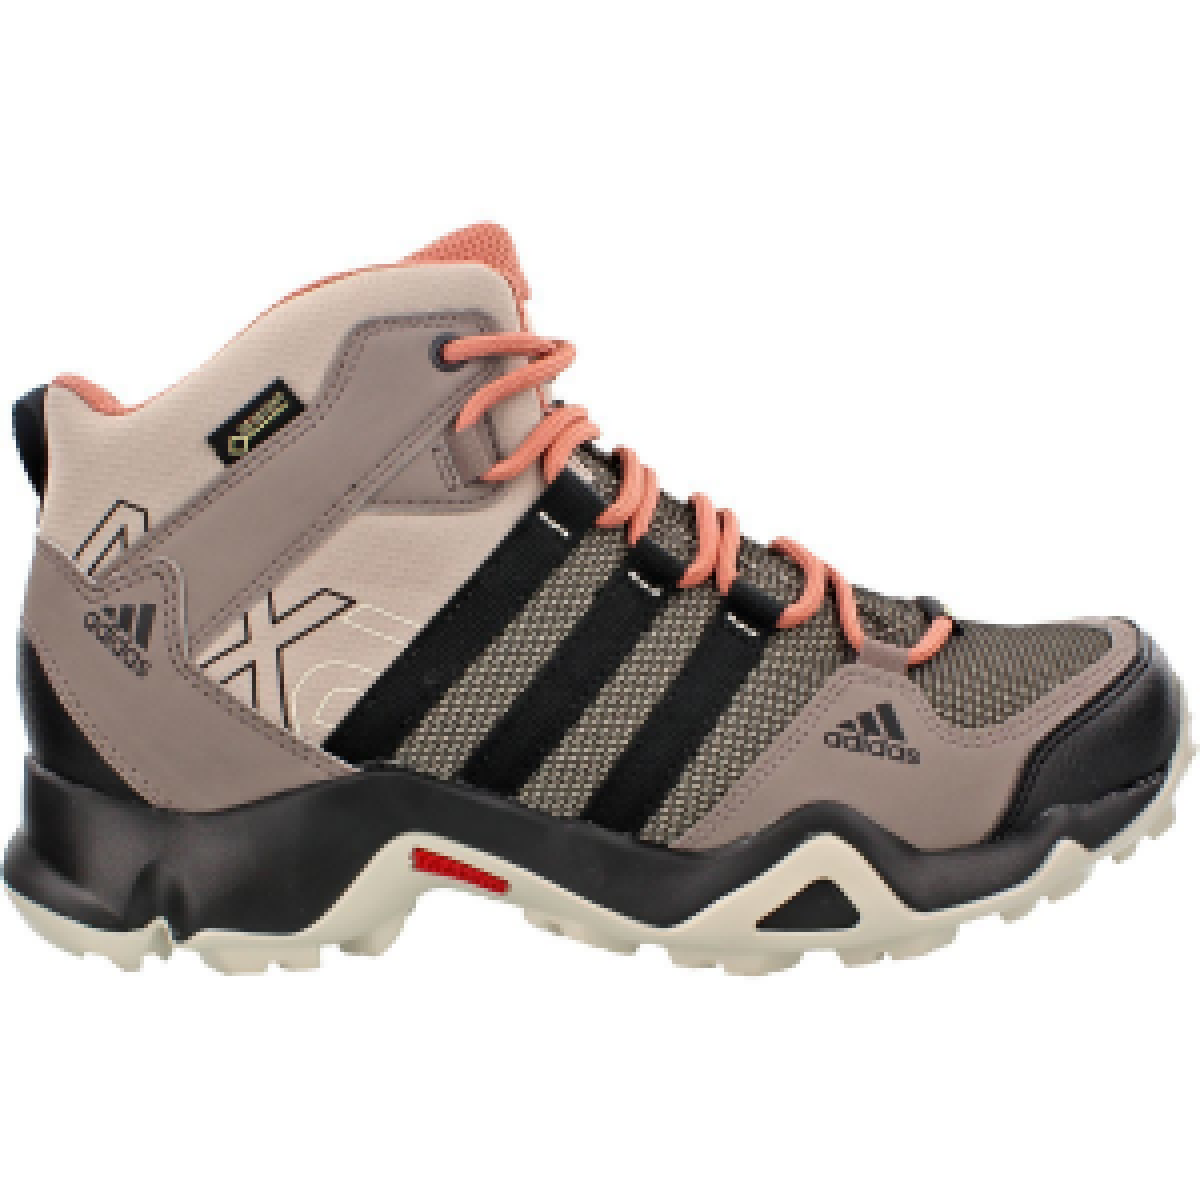 Adidas Outdoor AX2 Mid GTX Hiking Boot - Women's